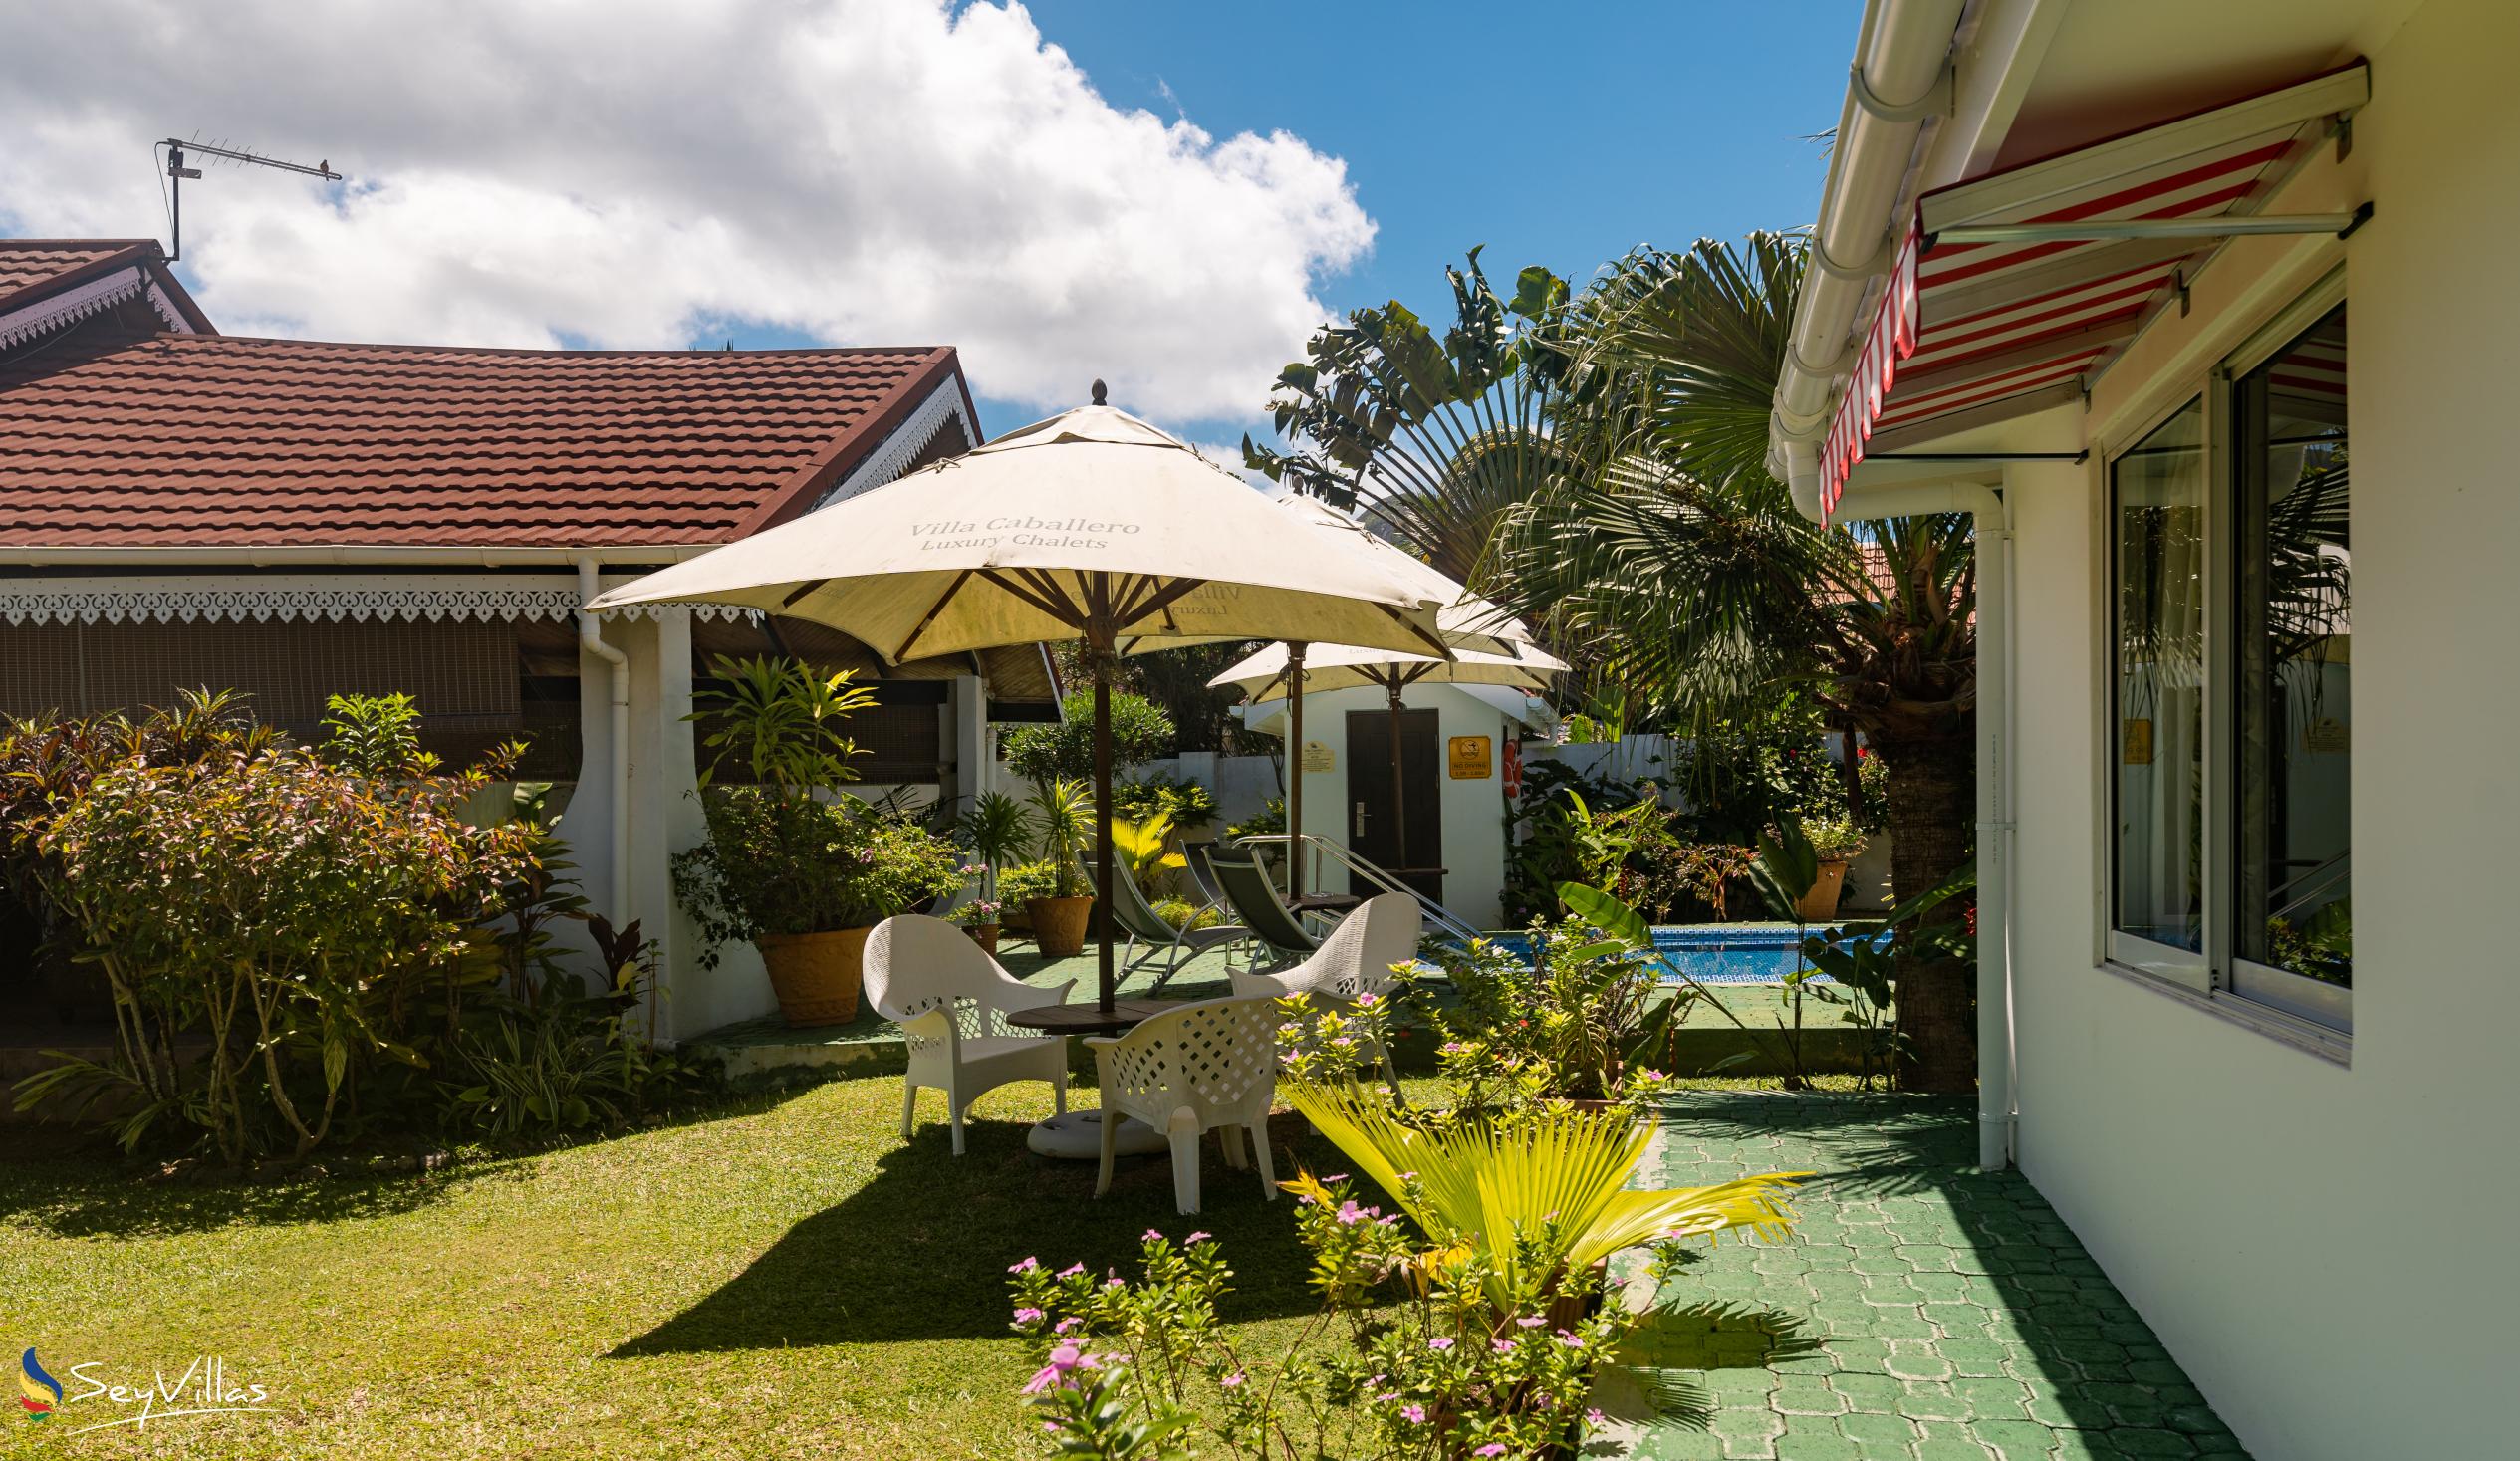 Foto 11: Villa Caballero - Aussenbereich - Mahé (Seychellen)